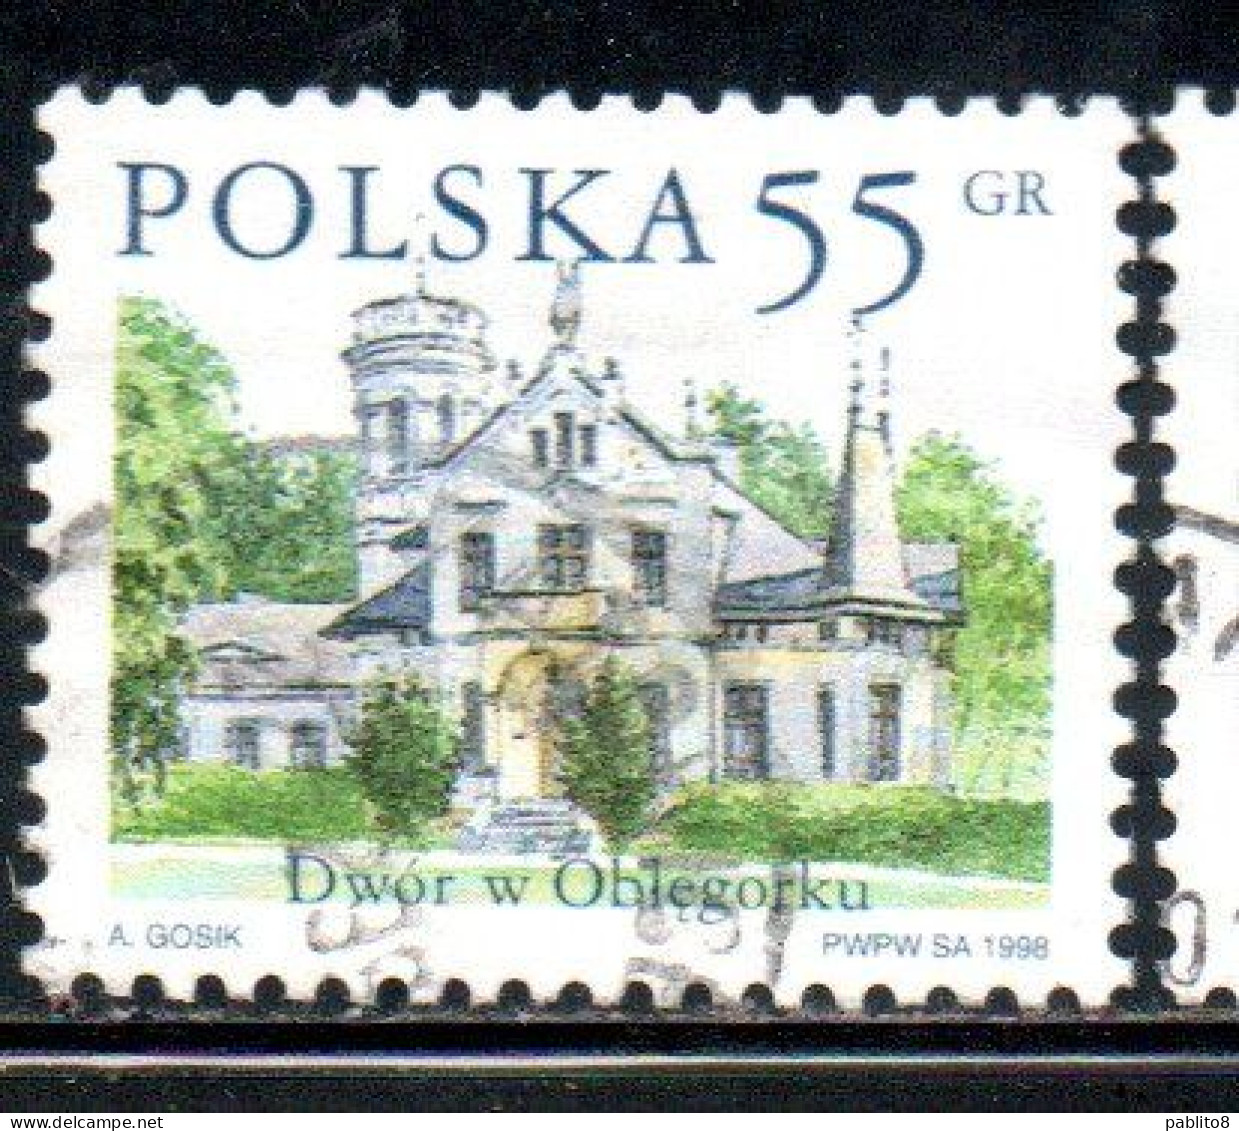 POLONIA POLAND POLSKA 1998 COUNTRY ESTATES OBLEGORKU 55g USED USATO OBLITERE' - Usados